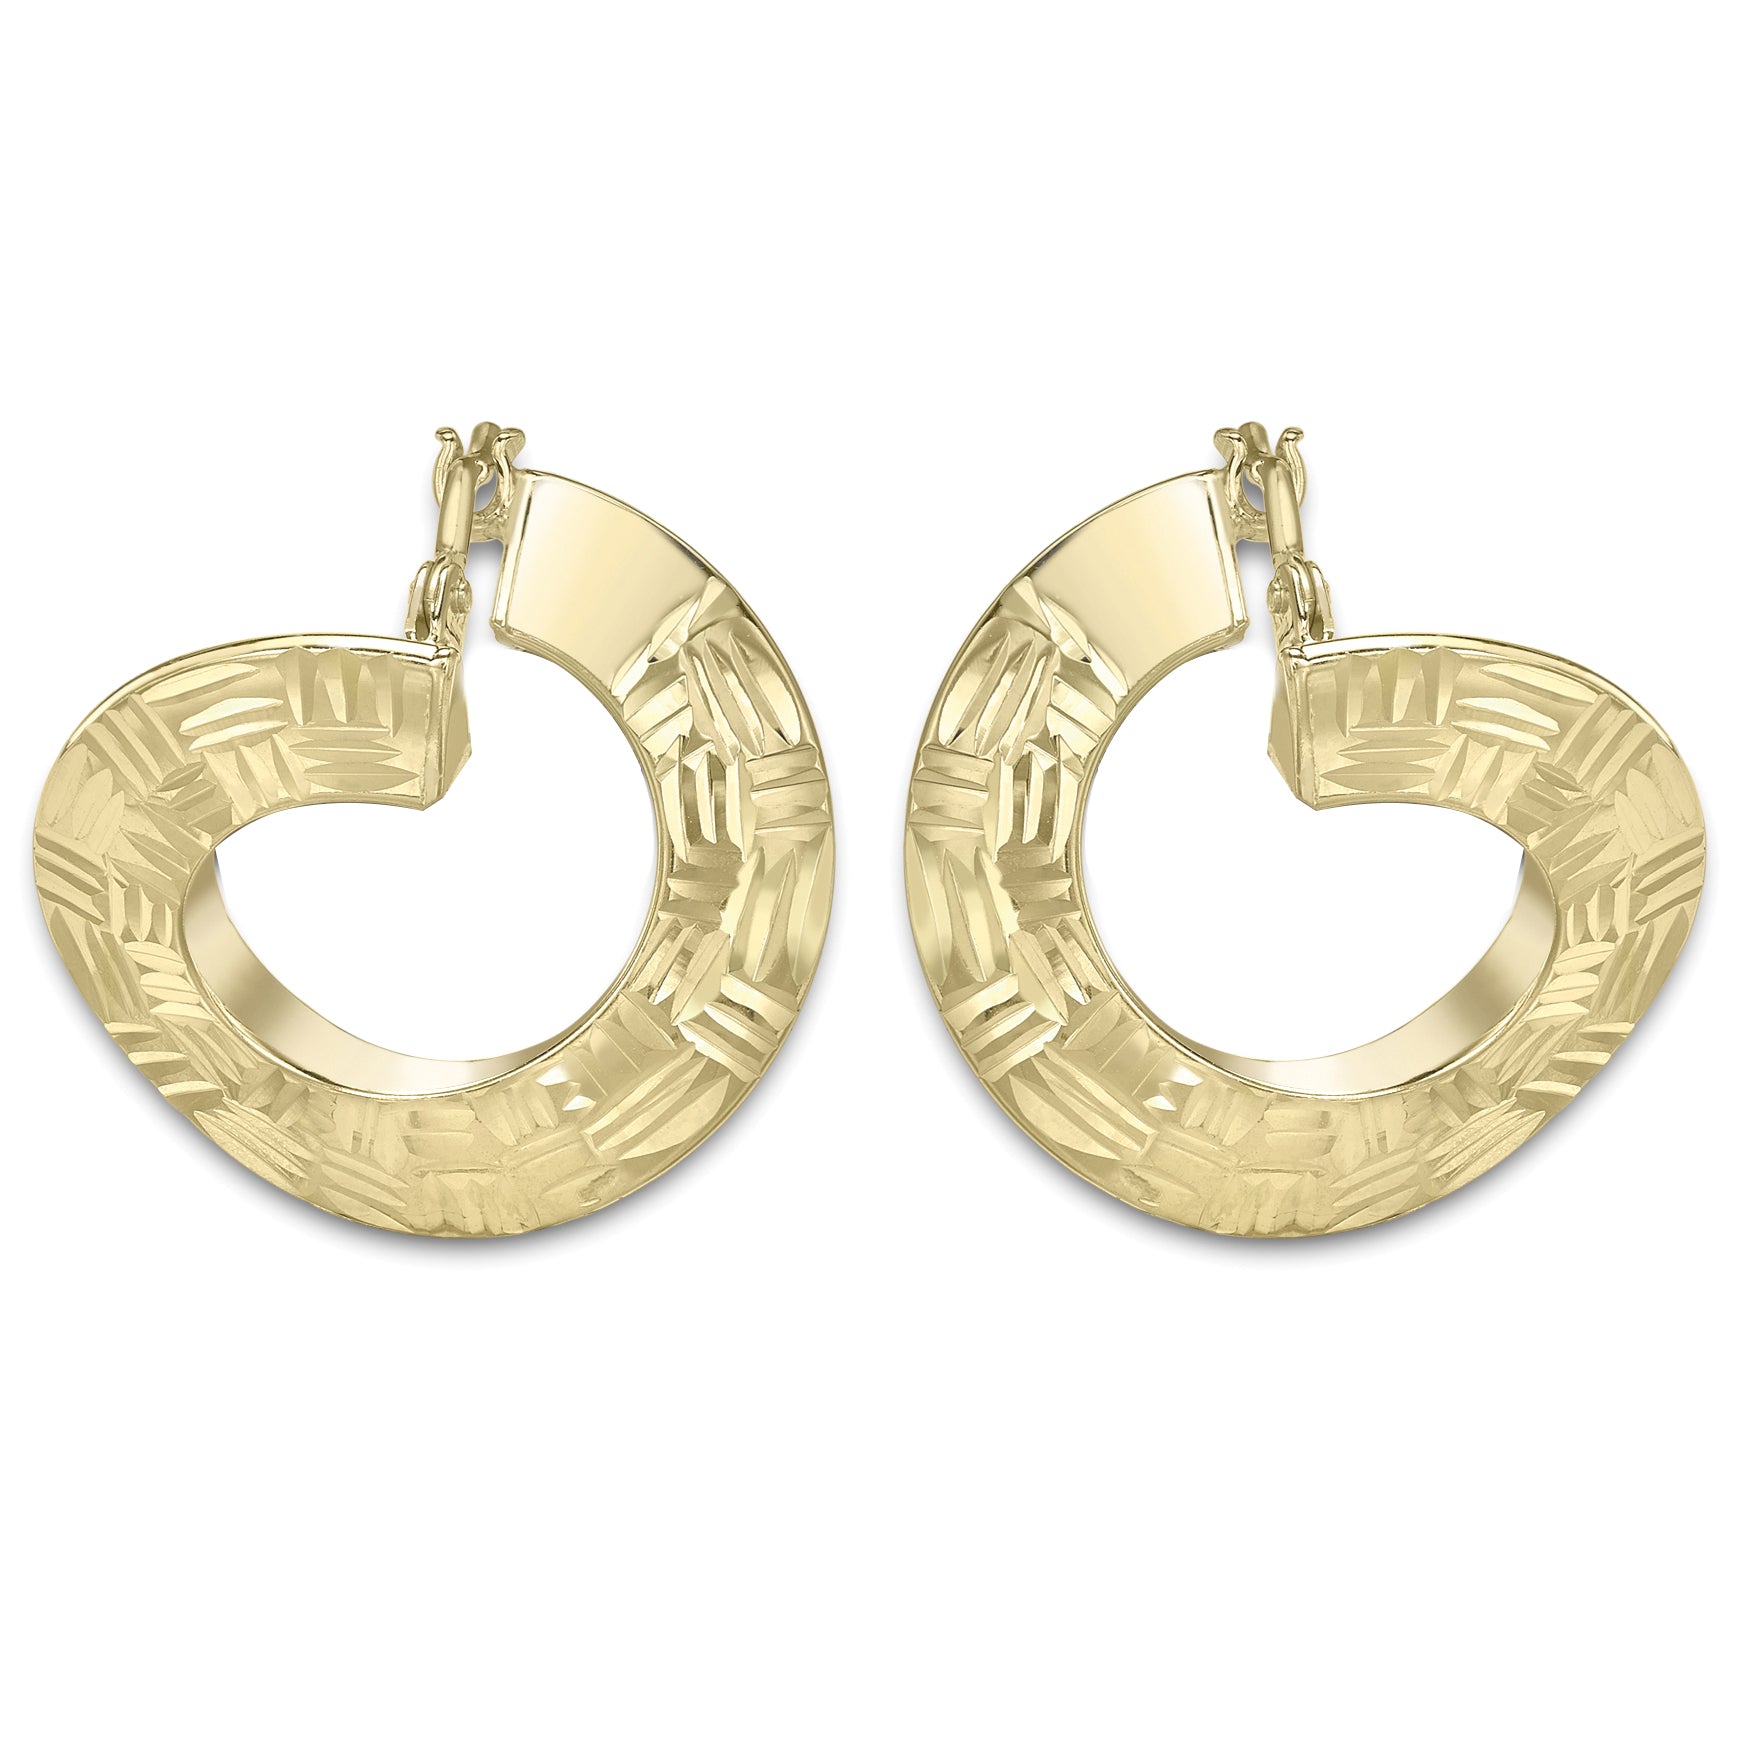 9ct Gold  Basket "Front and Back" Hoop Earrings - ERNR02255